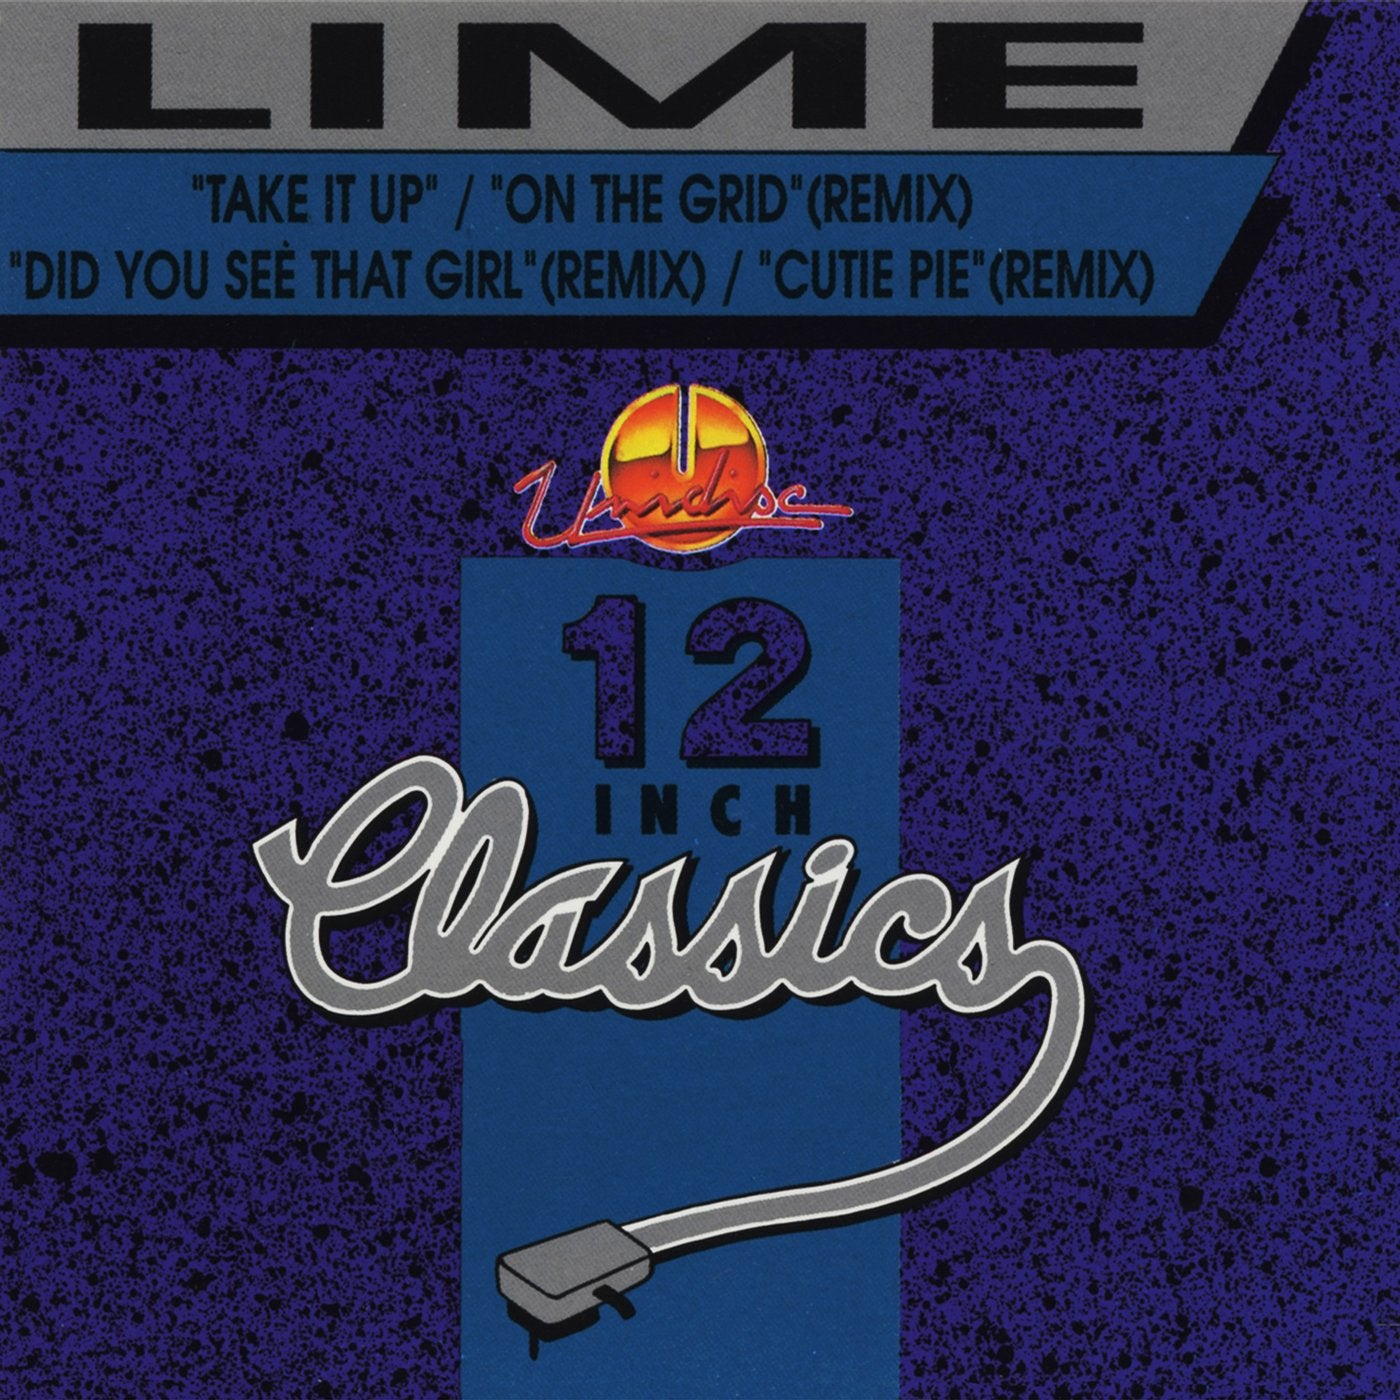 12 Inch Classics - EP